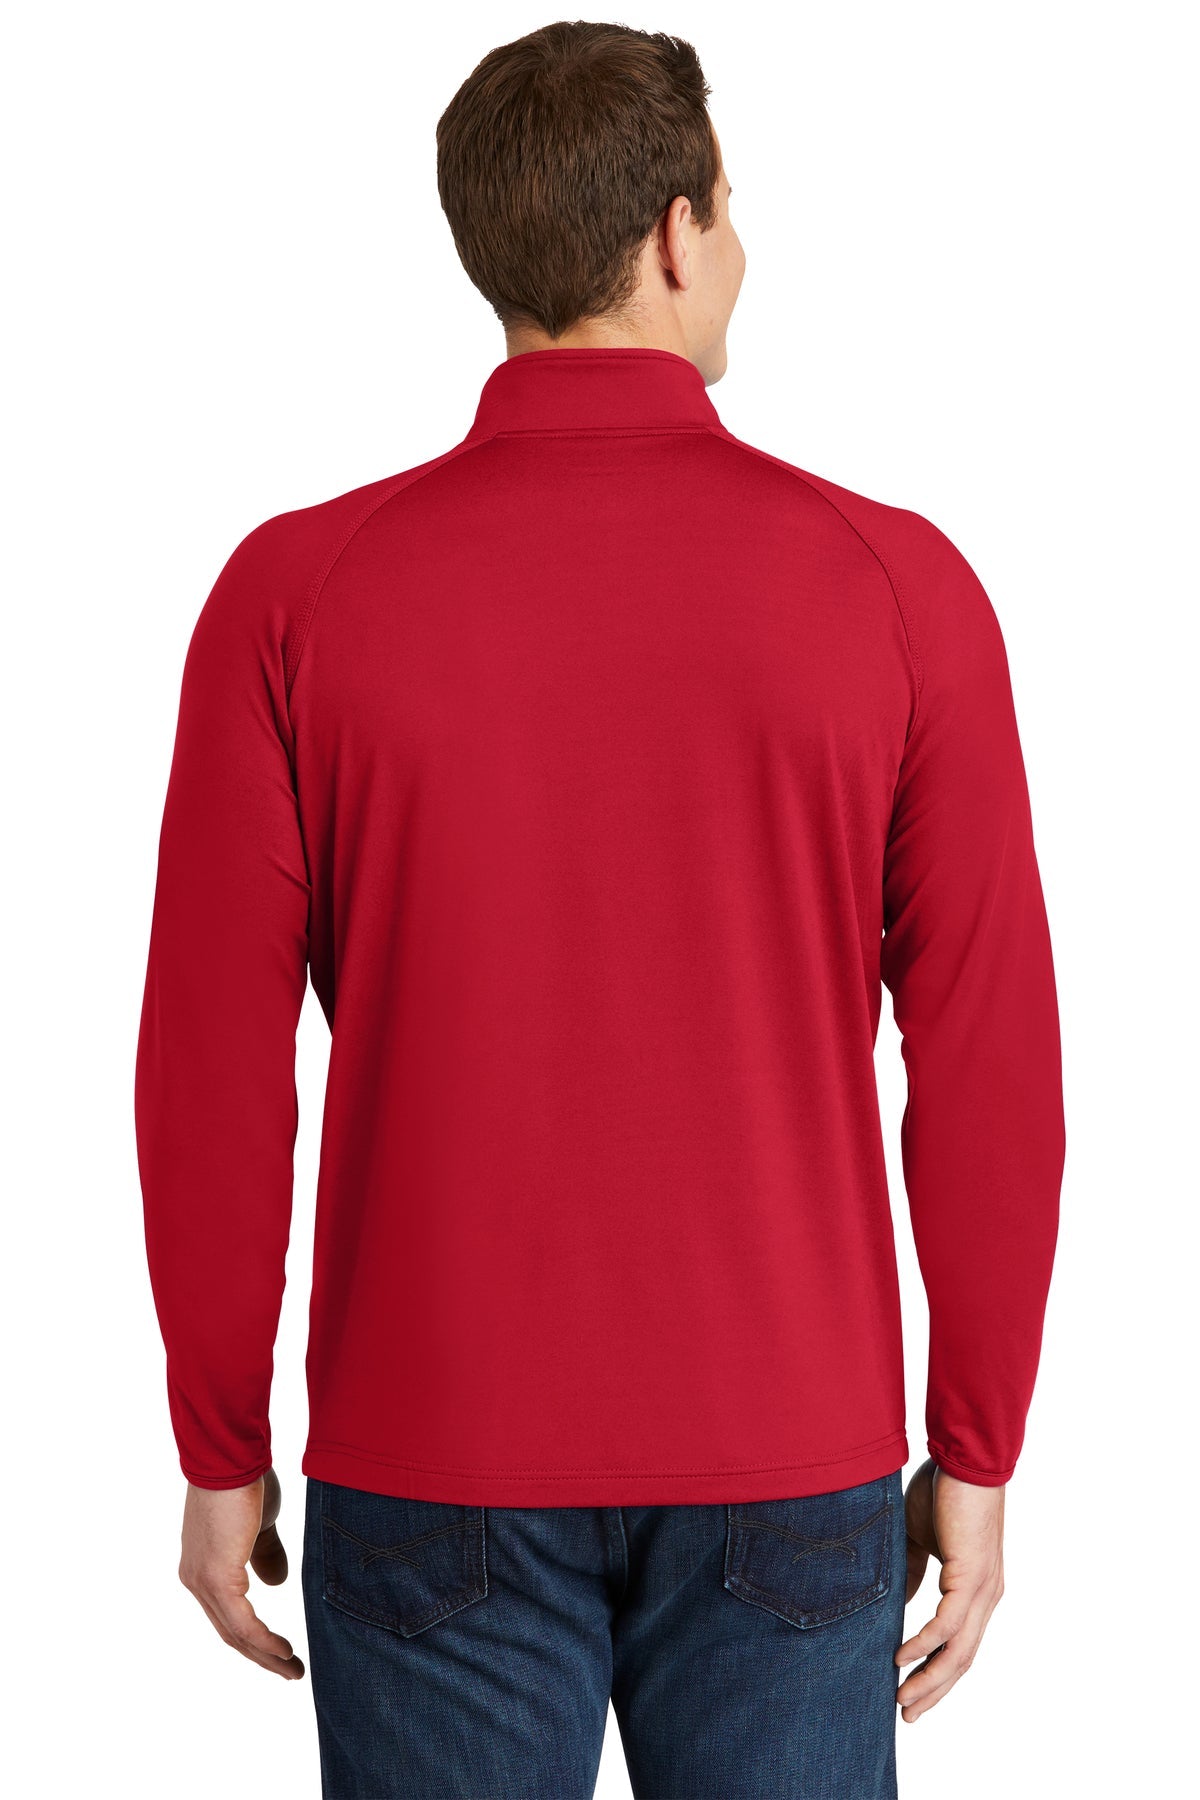 sport-tek_st850 _true red_company_logo_sweatshirts